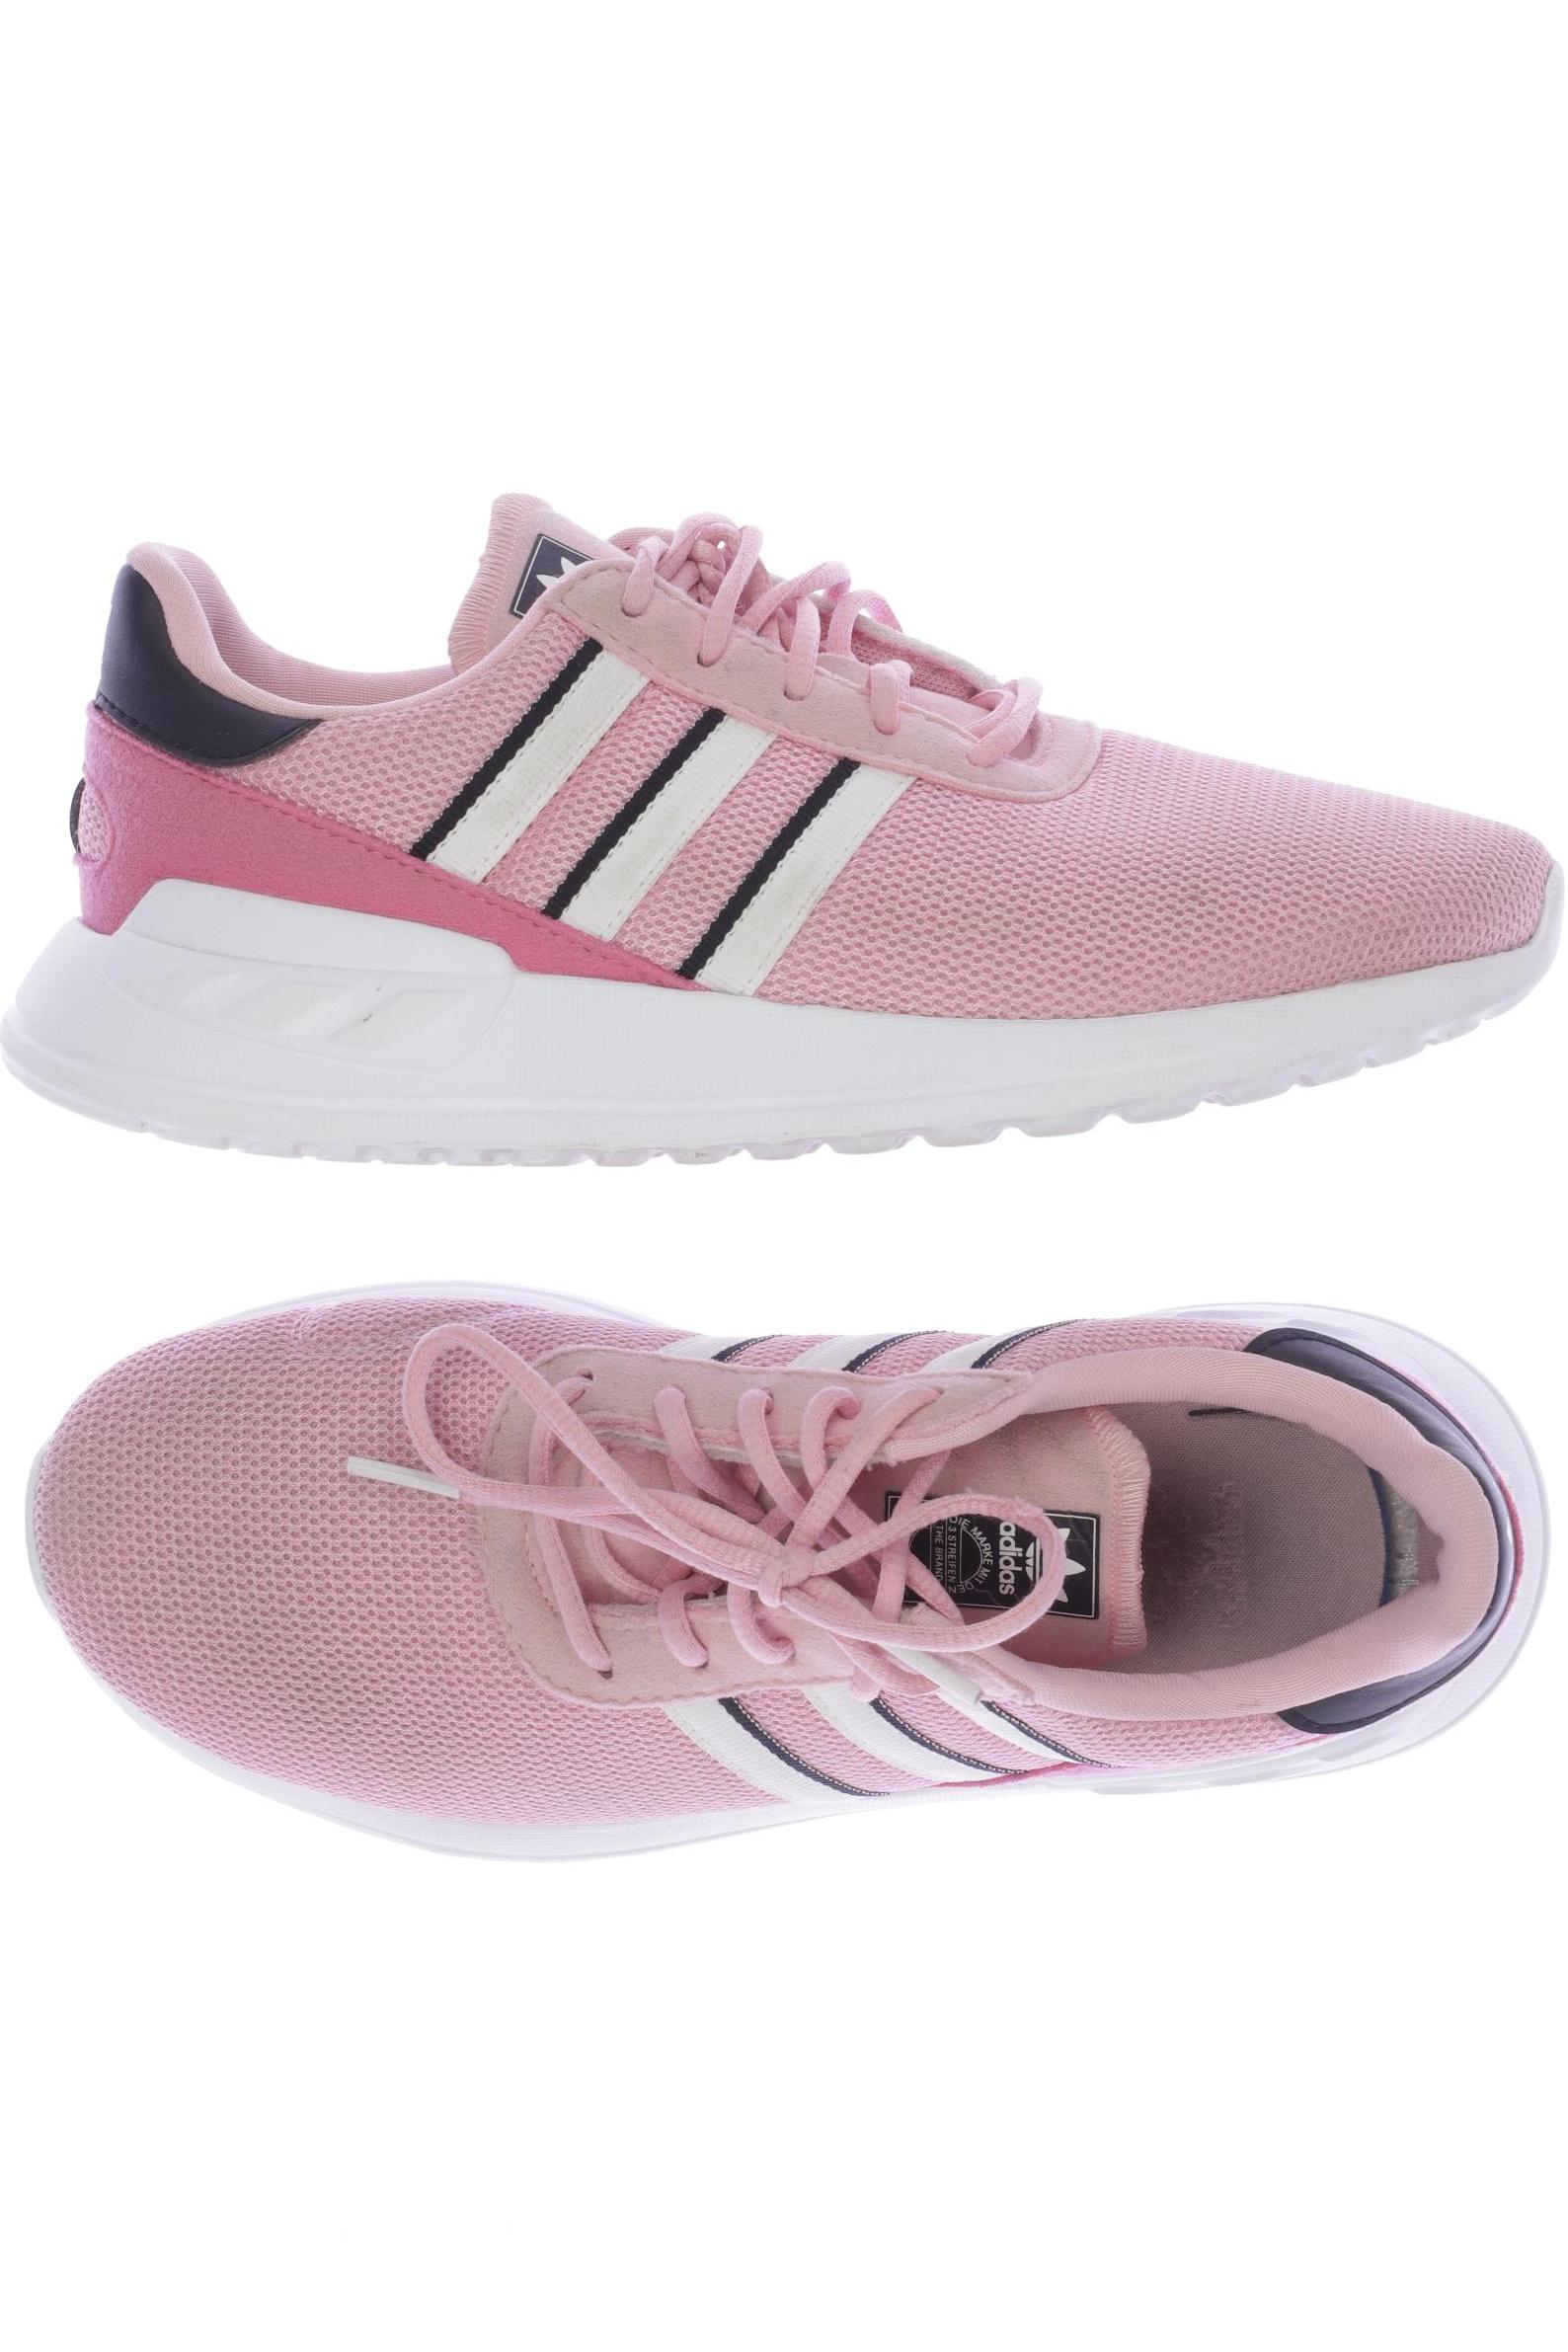 adidas Originals Damen Sneakers, pink von adidas Originals